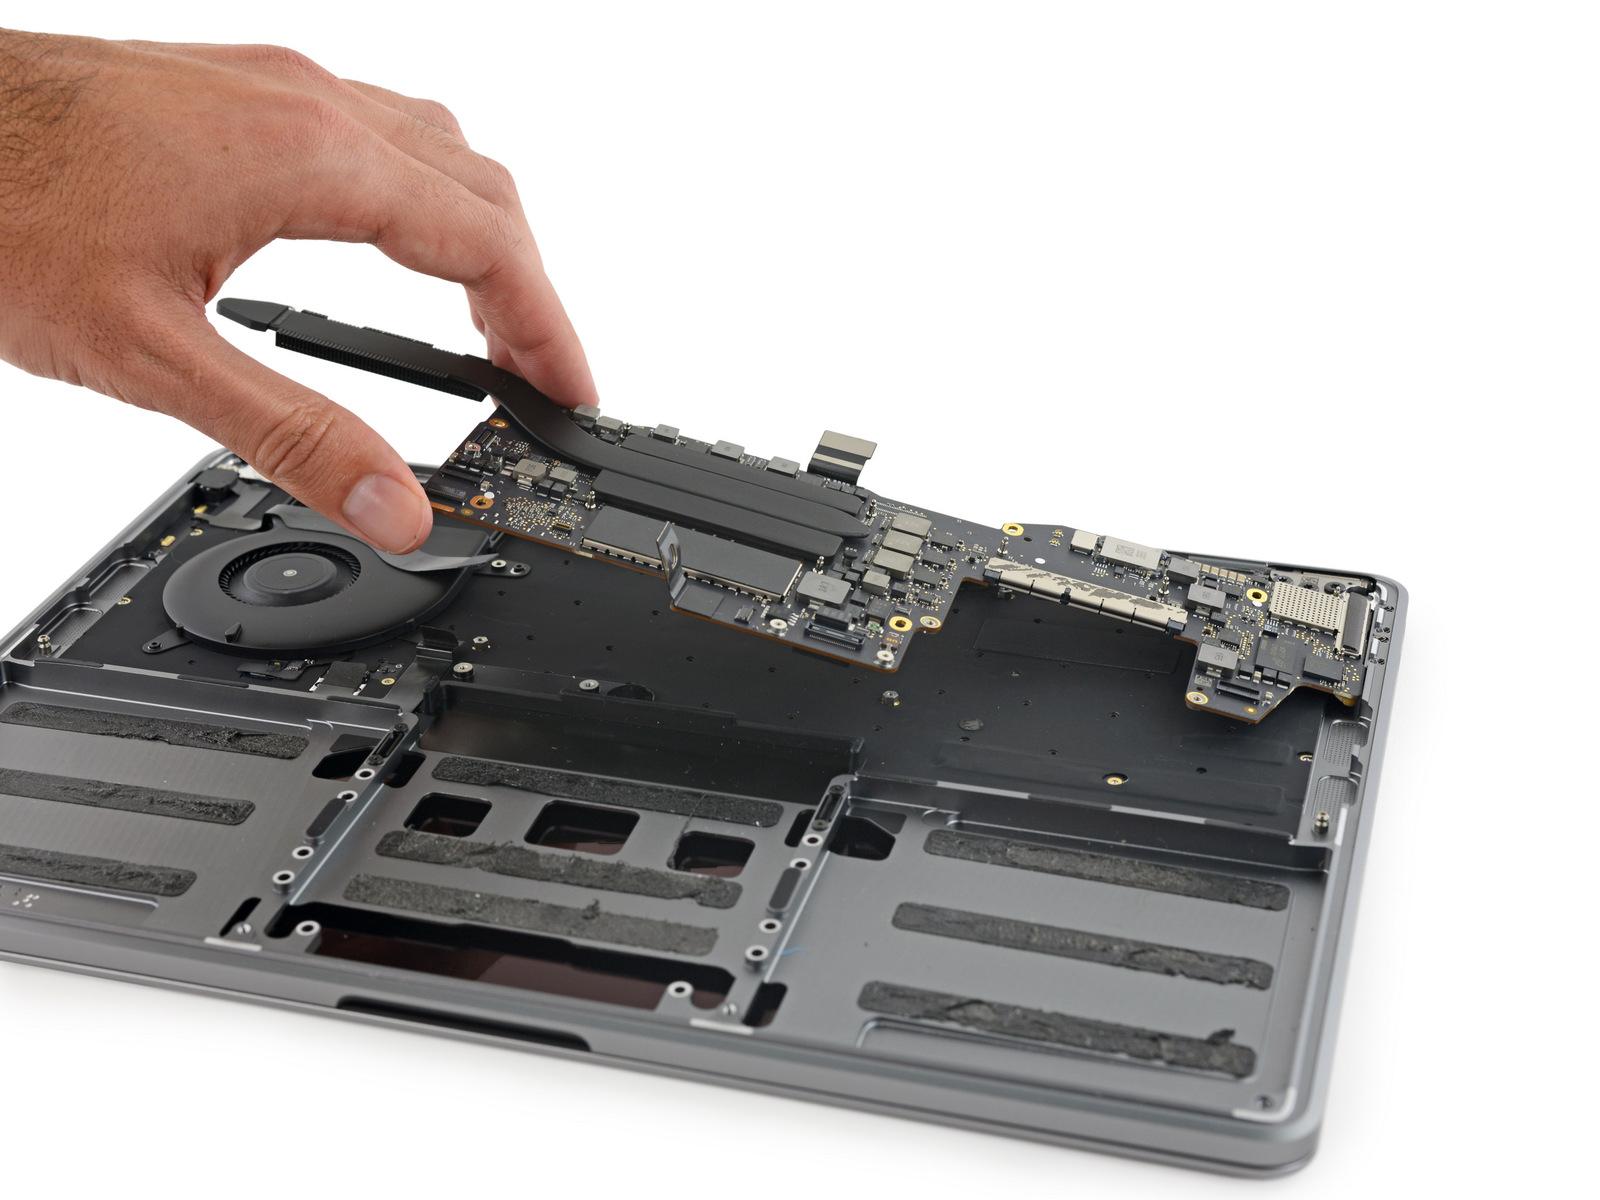 Entrylevel late 2016 MacBook Pro not so easy to repair SlashGear